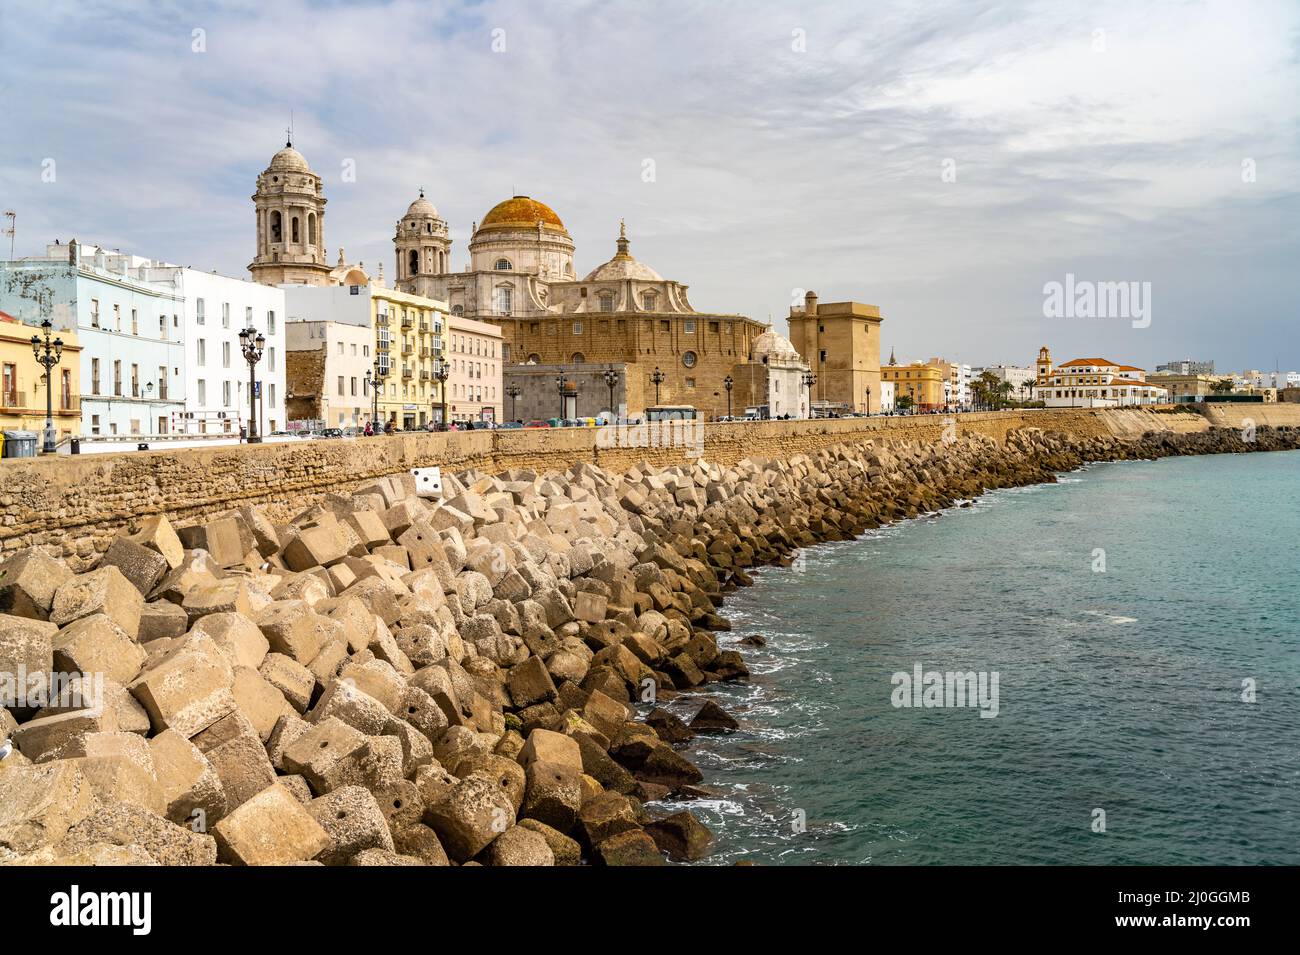 Uferpromenade und die Kathedrale von Cádiz, Andalusien, Spanien  |  Seafront promenade and cathedral in Cádiz, Andalusia, Spain Stock Photo